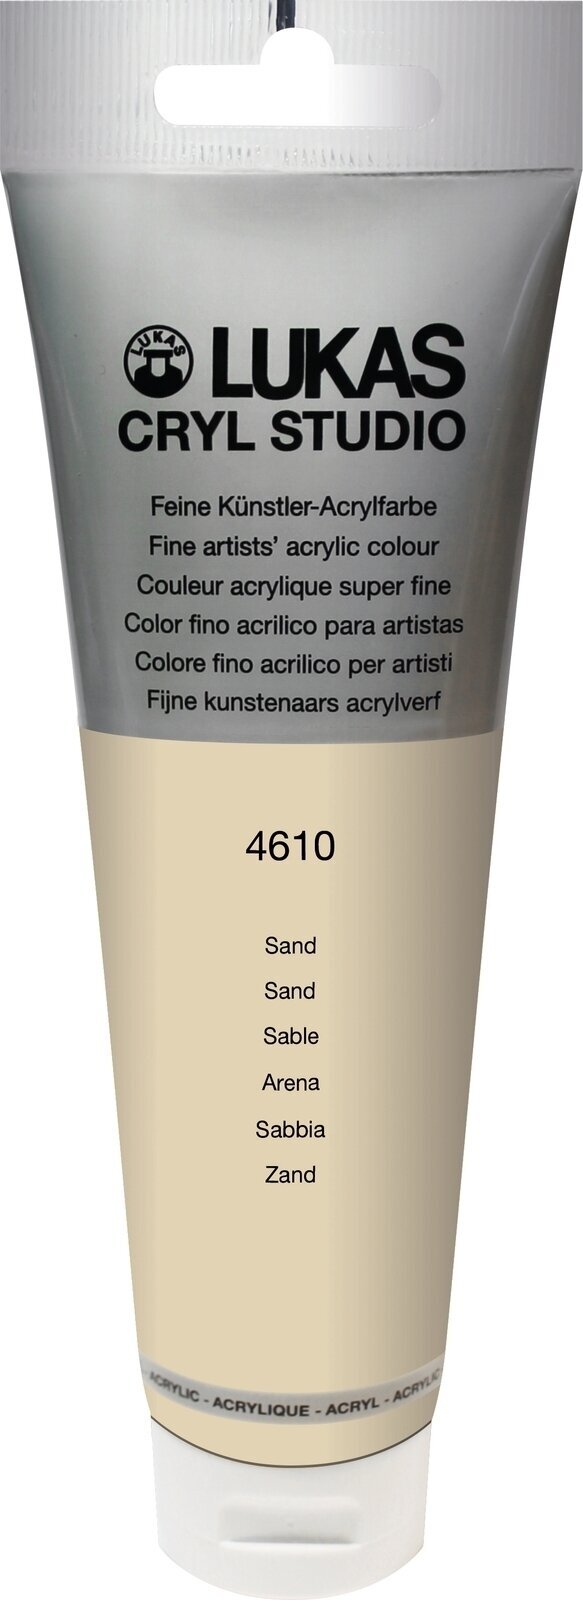 Akrylová barva Lukas Cryl Studio Acrylic Paint Plastic Tube Akrylová barva Sand 125 ml 1 ks